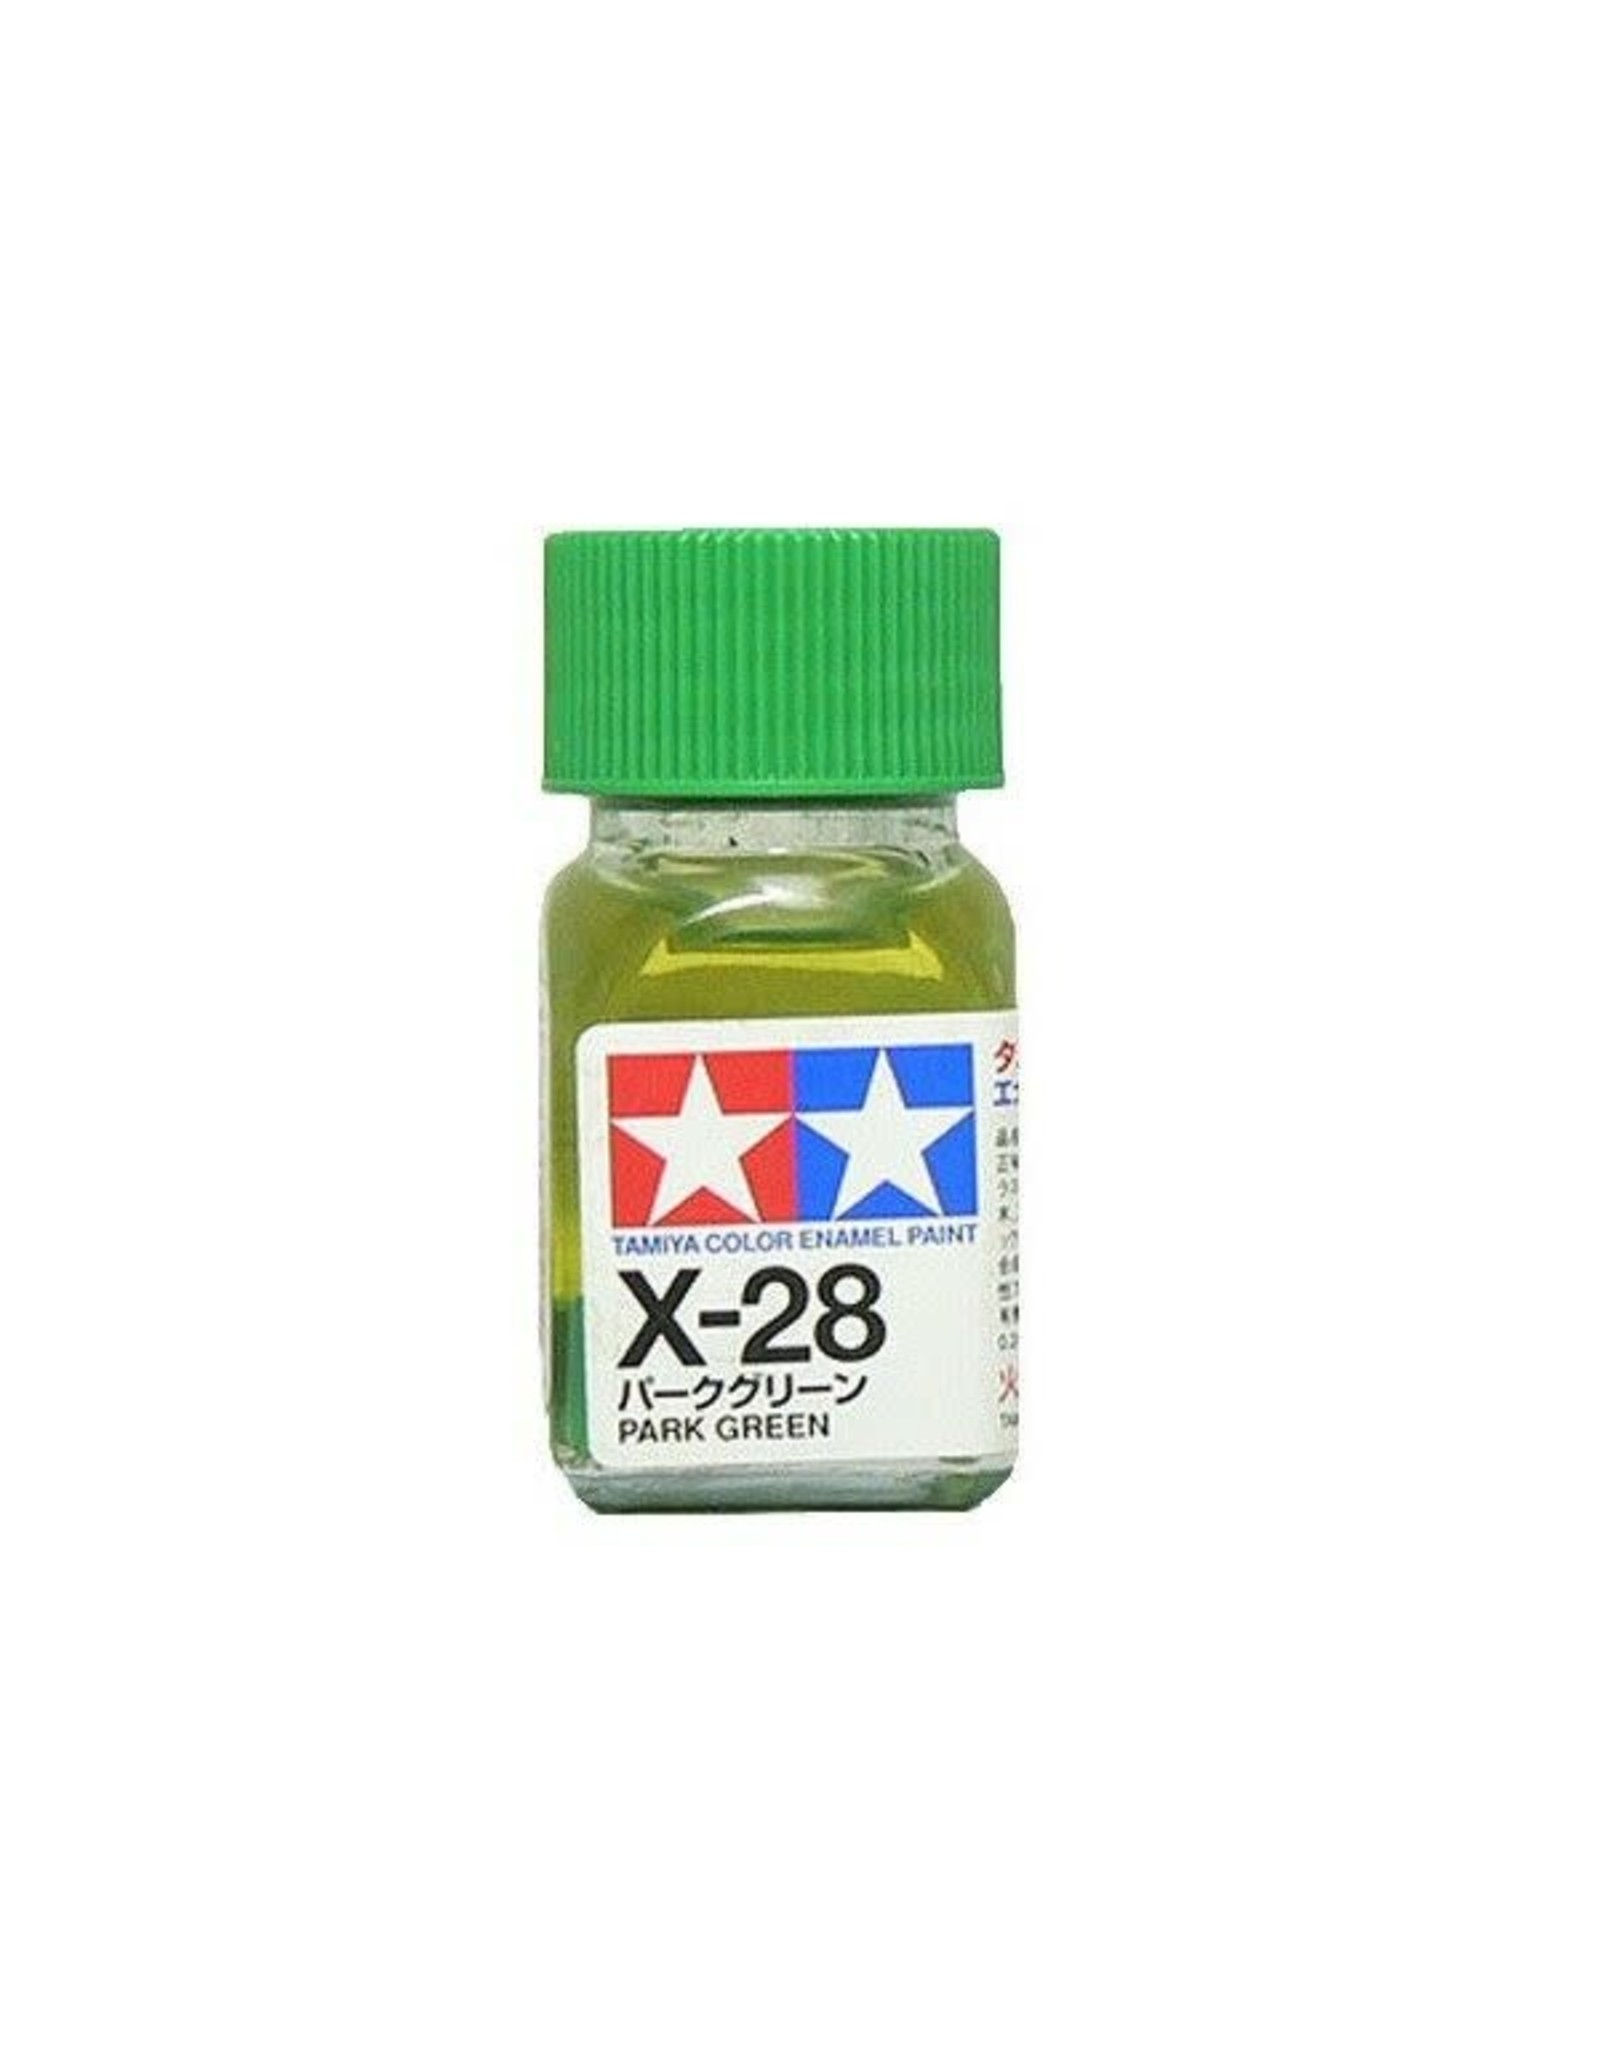 Tamiya Tamiya color enamel paint - X-28- Park green